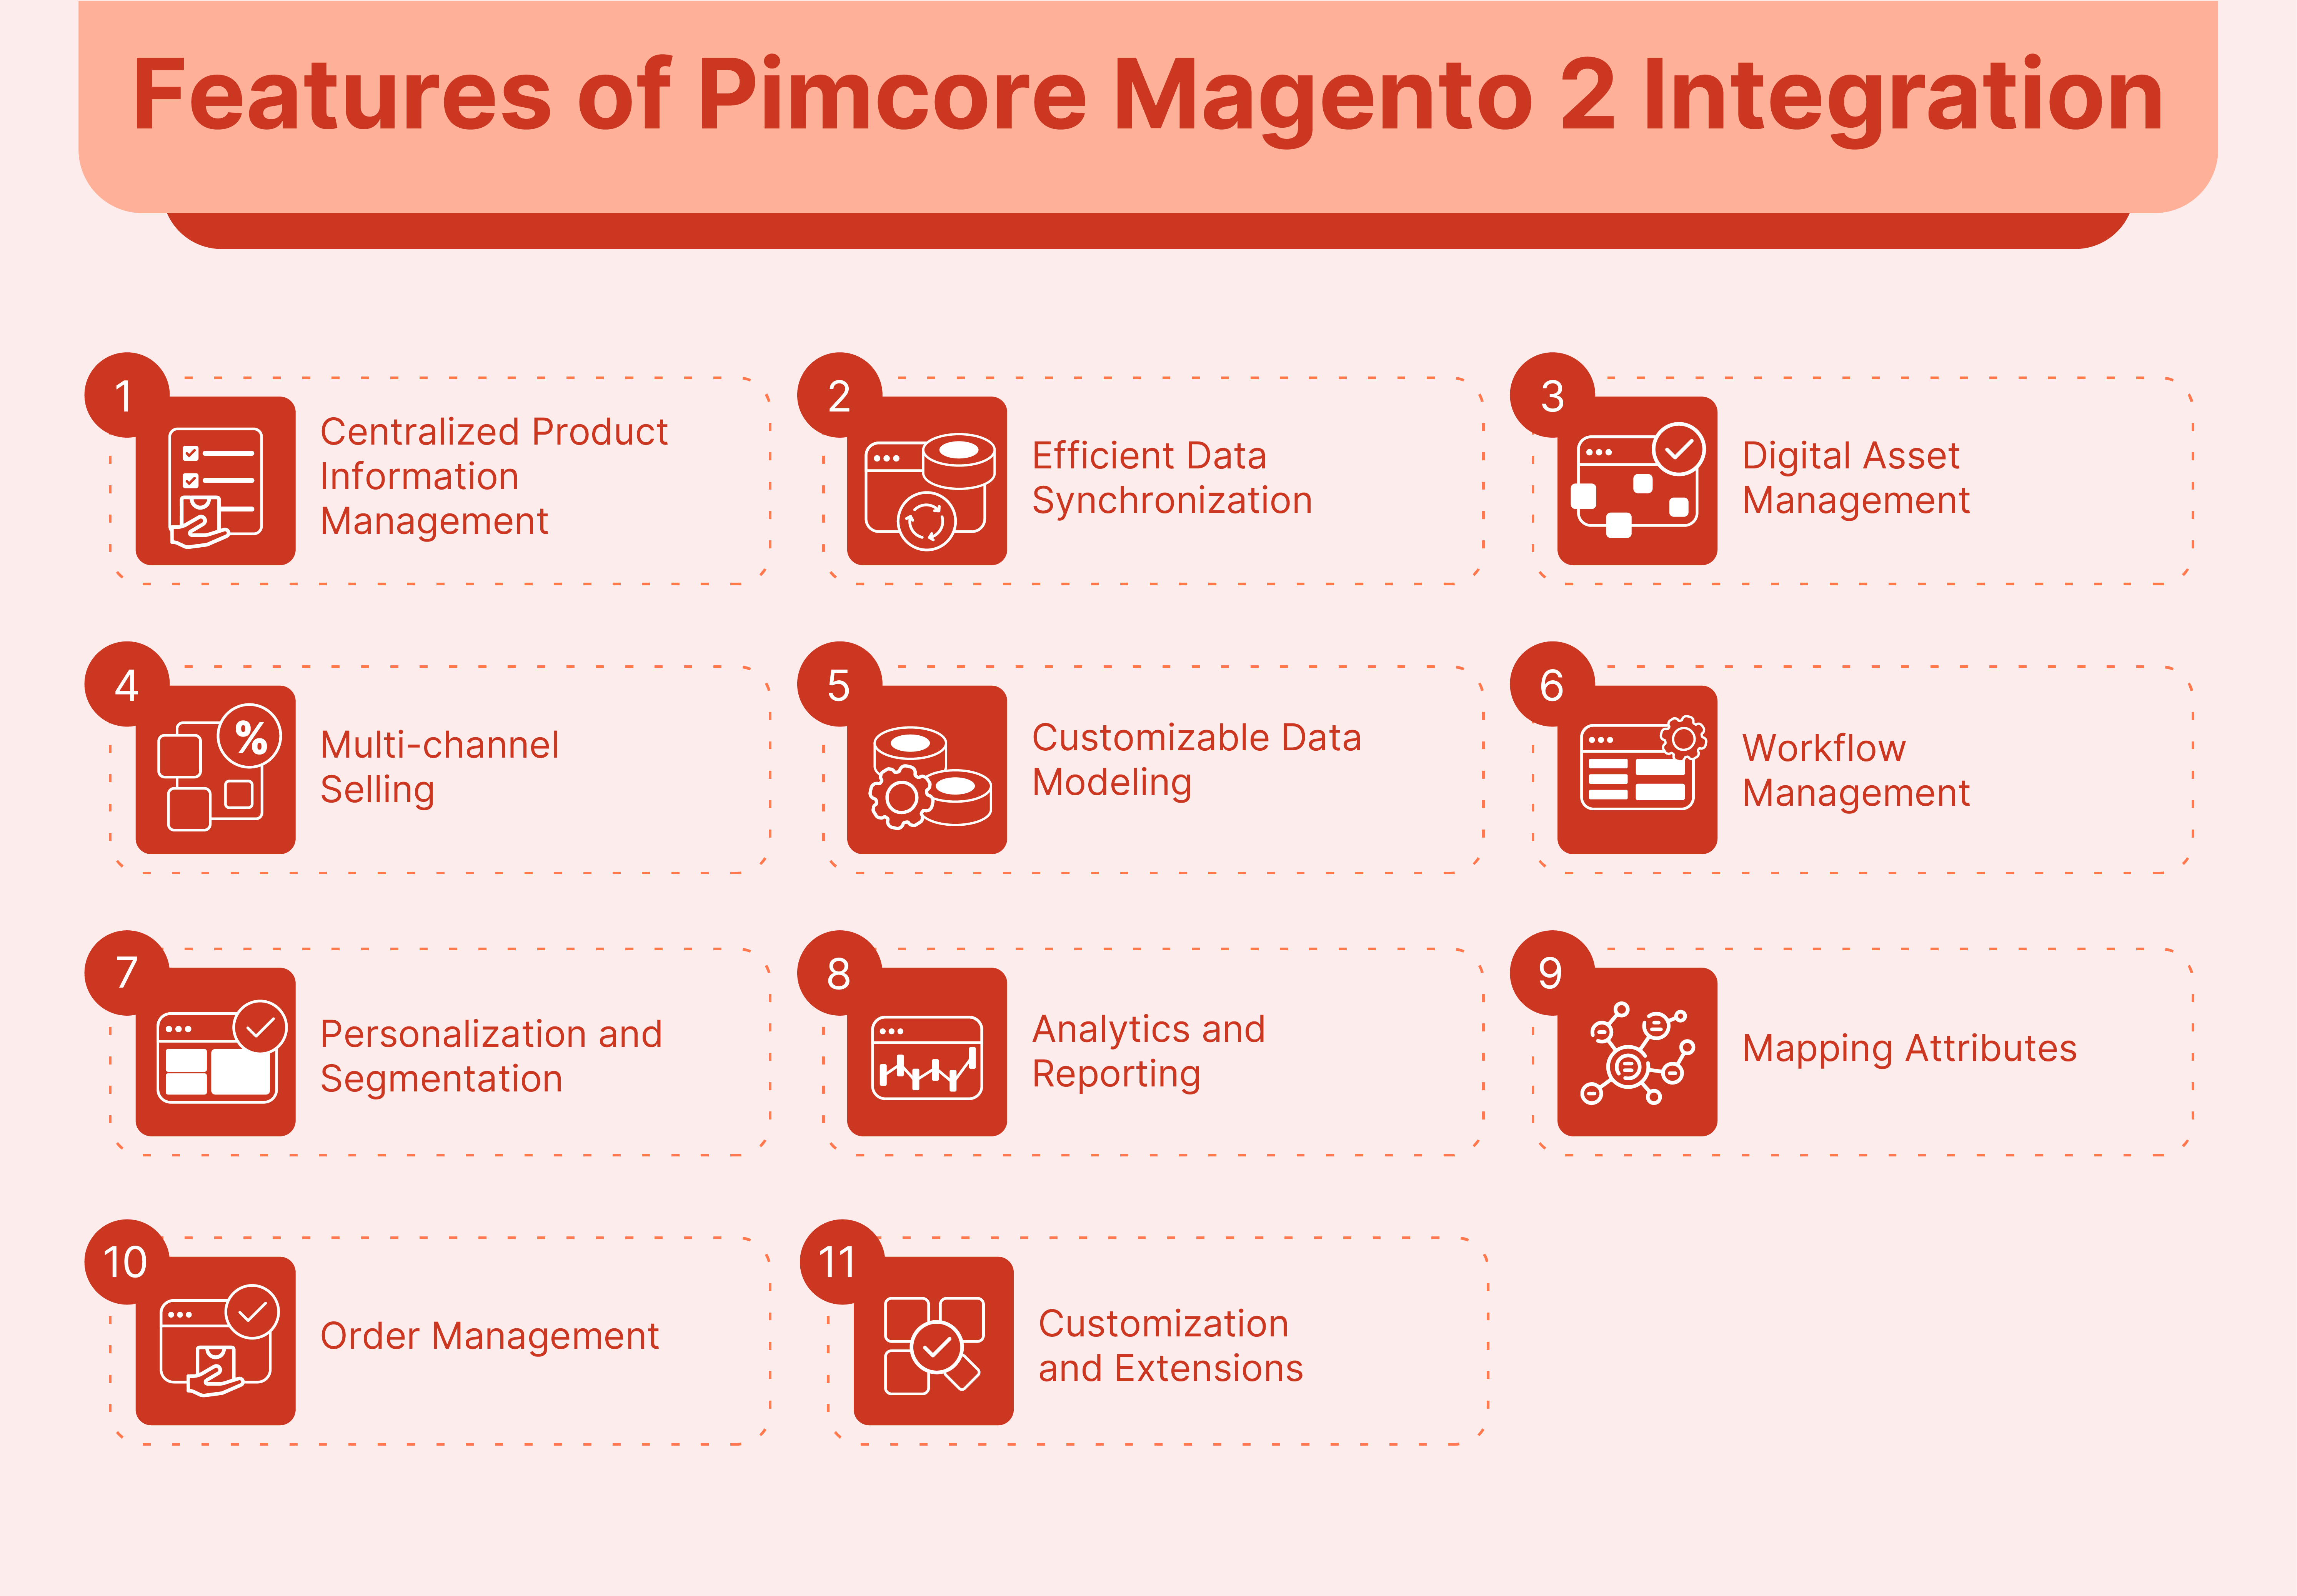 Features of Pimcore Magento 2 Integration